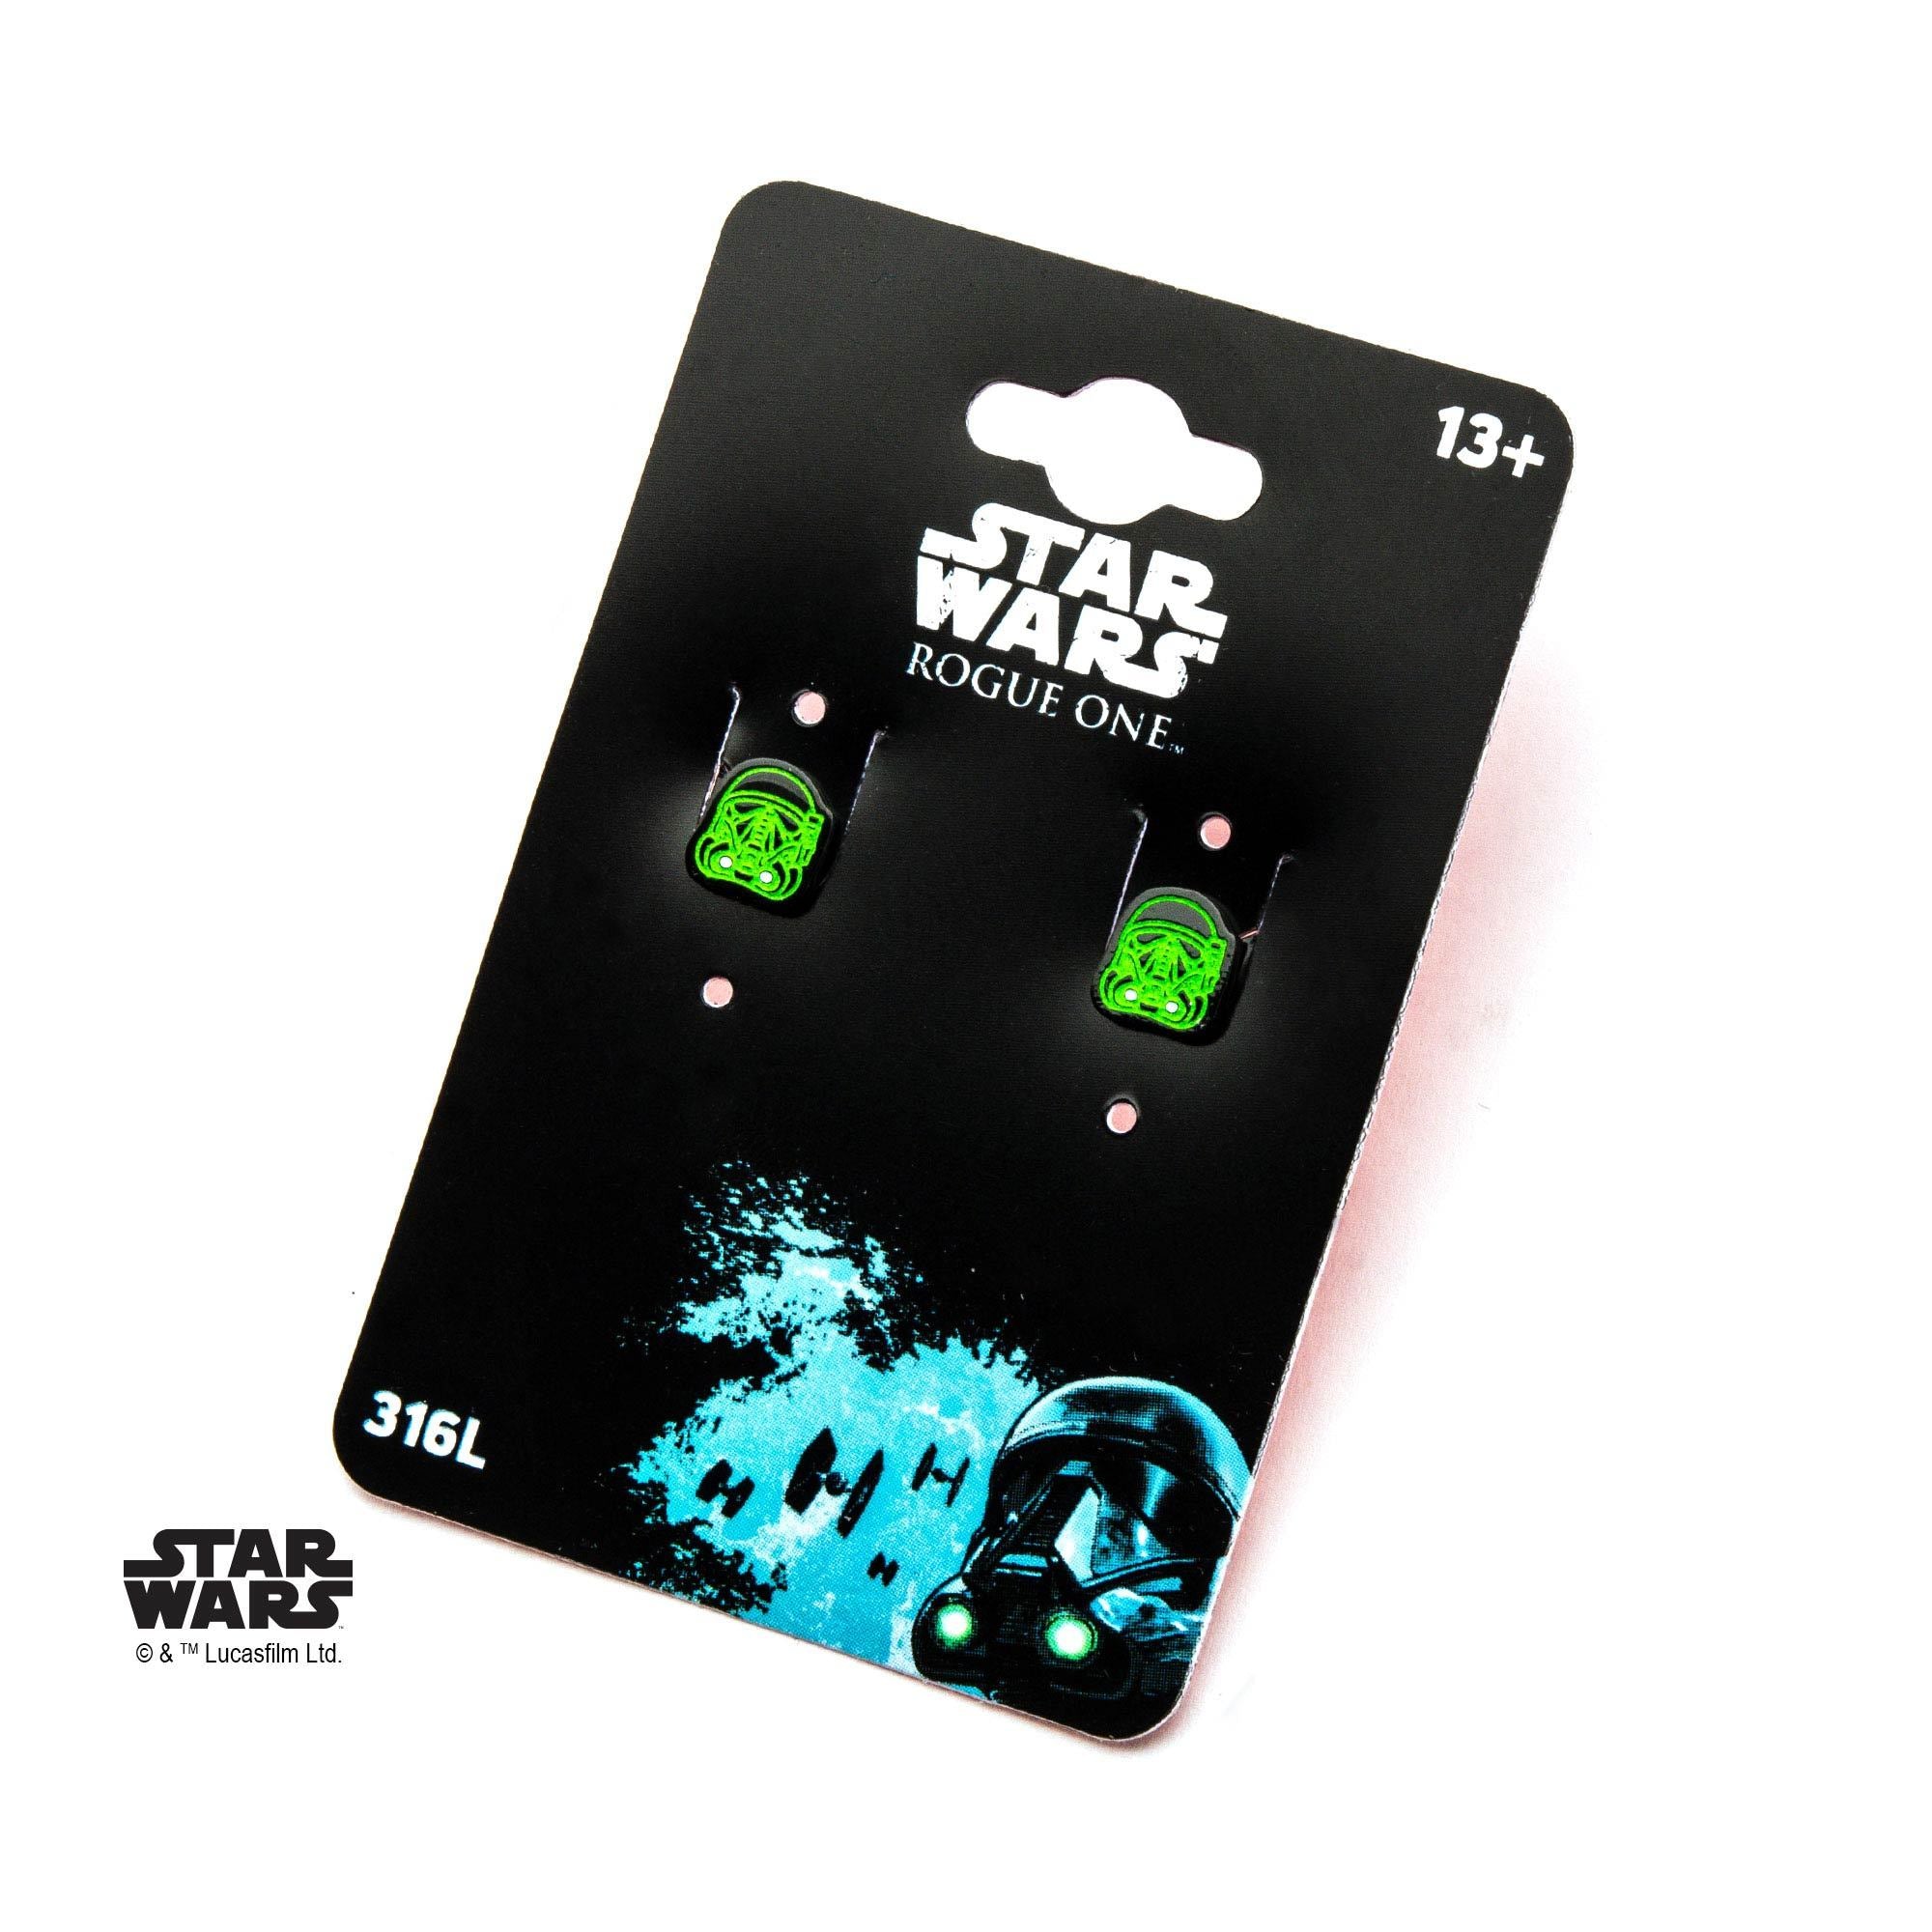 Star Wars Rogue One Death Trooper Glow-in-the-Dark Stud Earrings